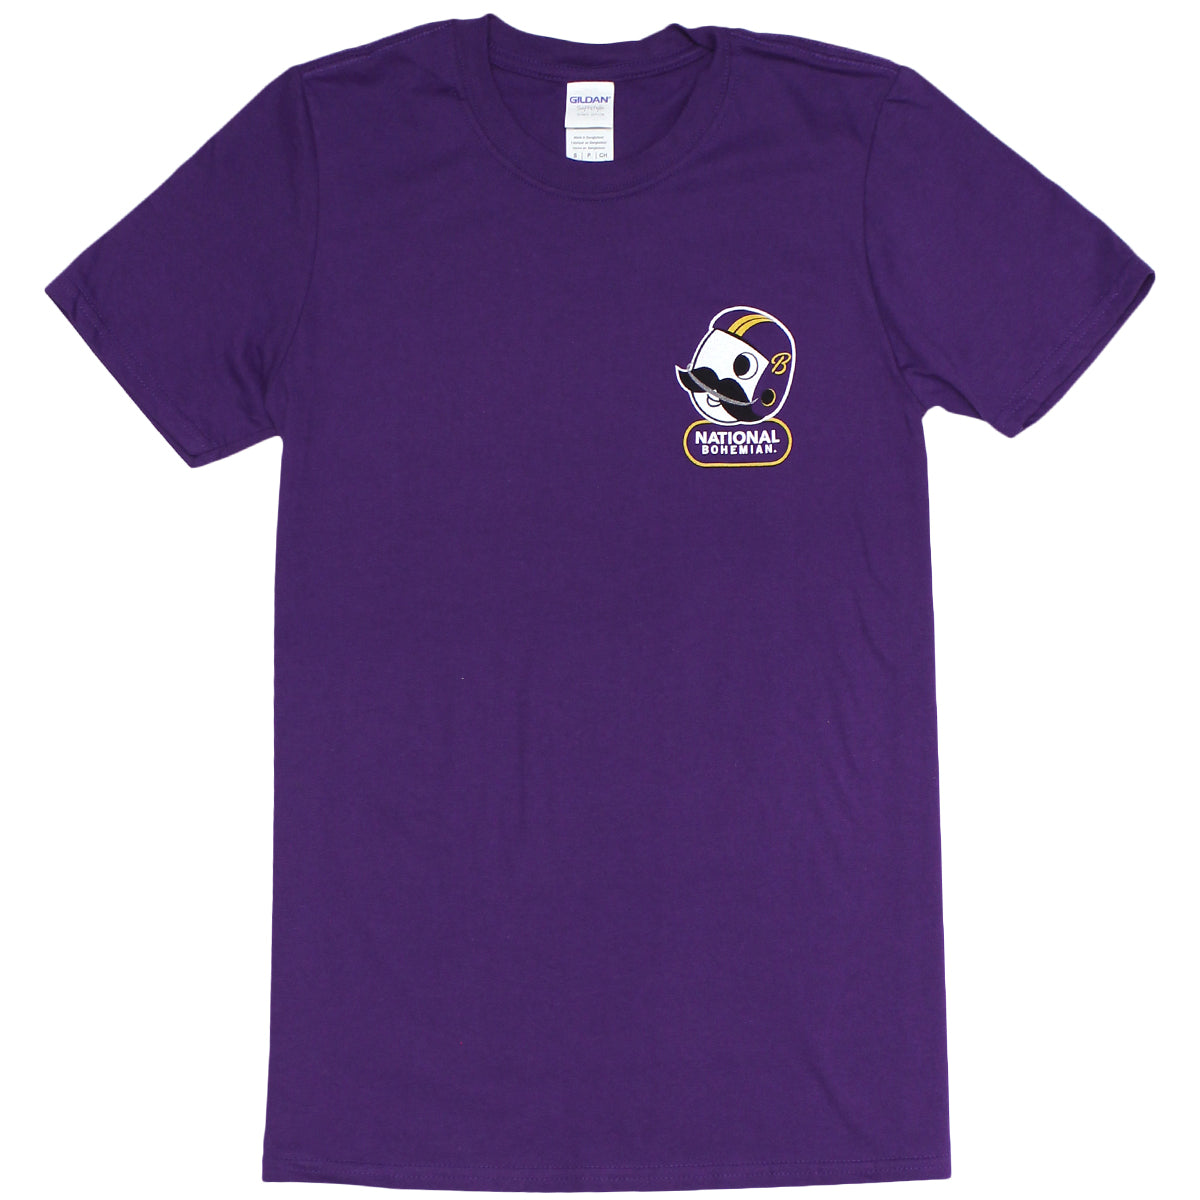 National Bohemian Football (Purple) / Shirt - Route One Apparel